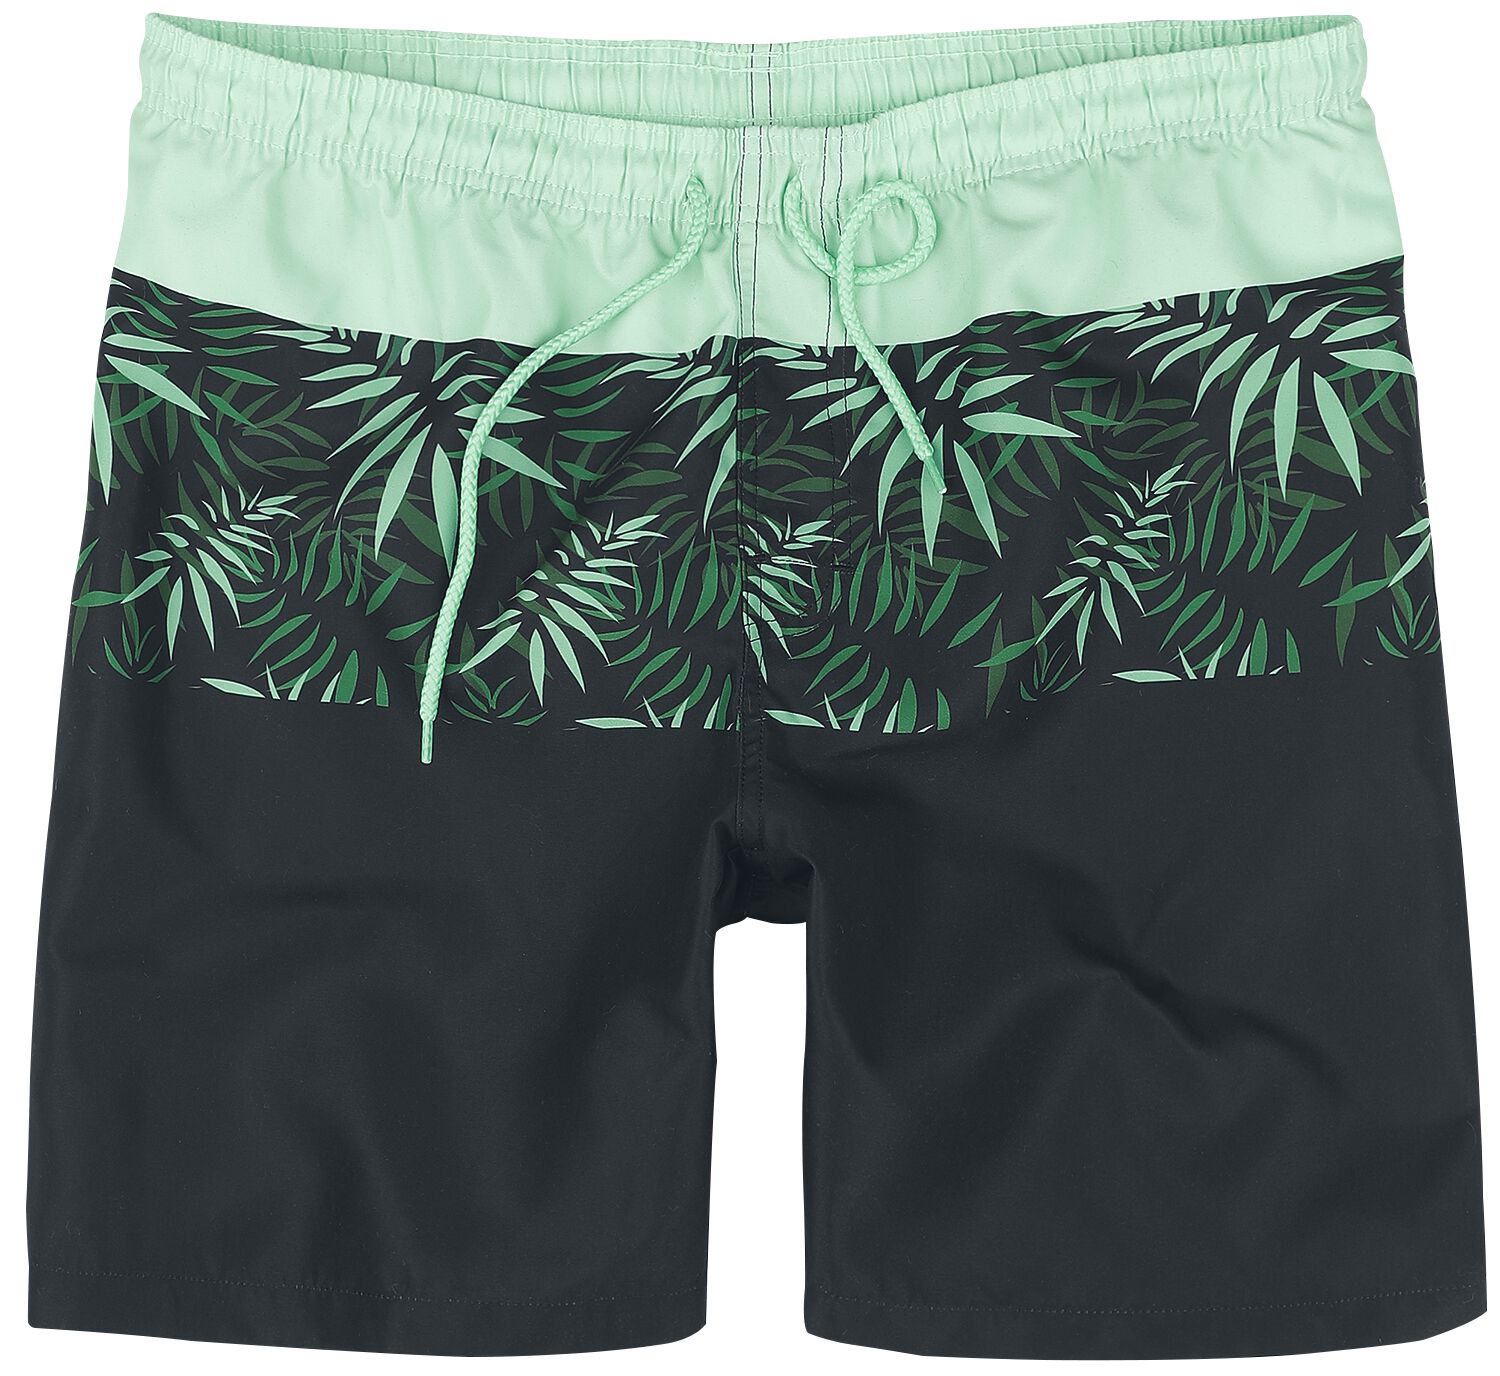 RED by EMP Swim Shorts With Palm Trees Badeshort schwarz grün in XXL